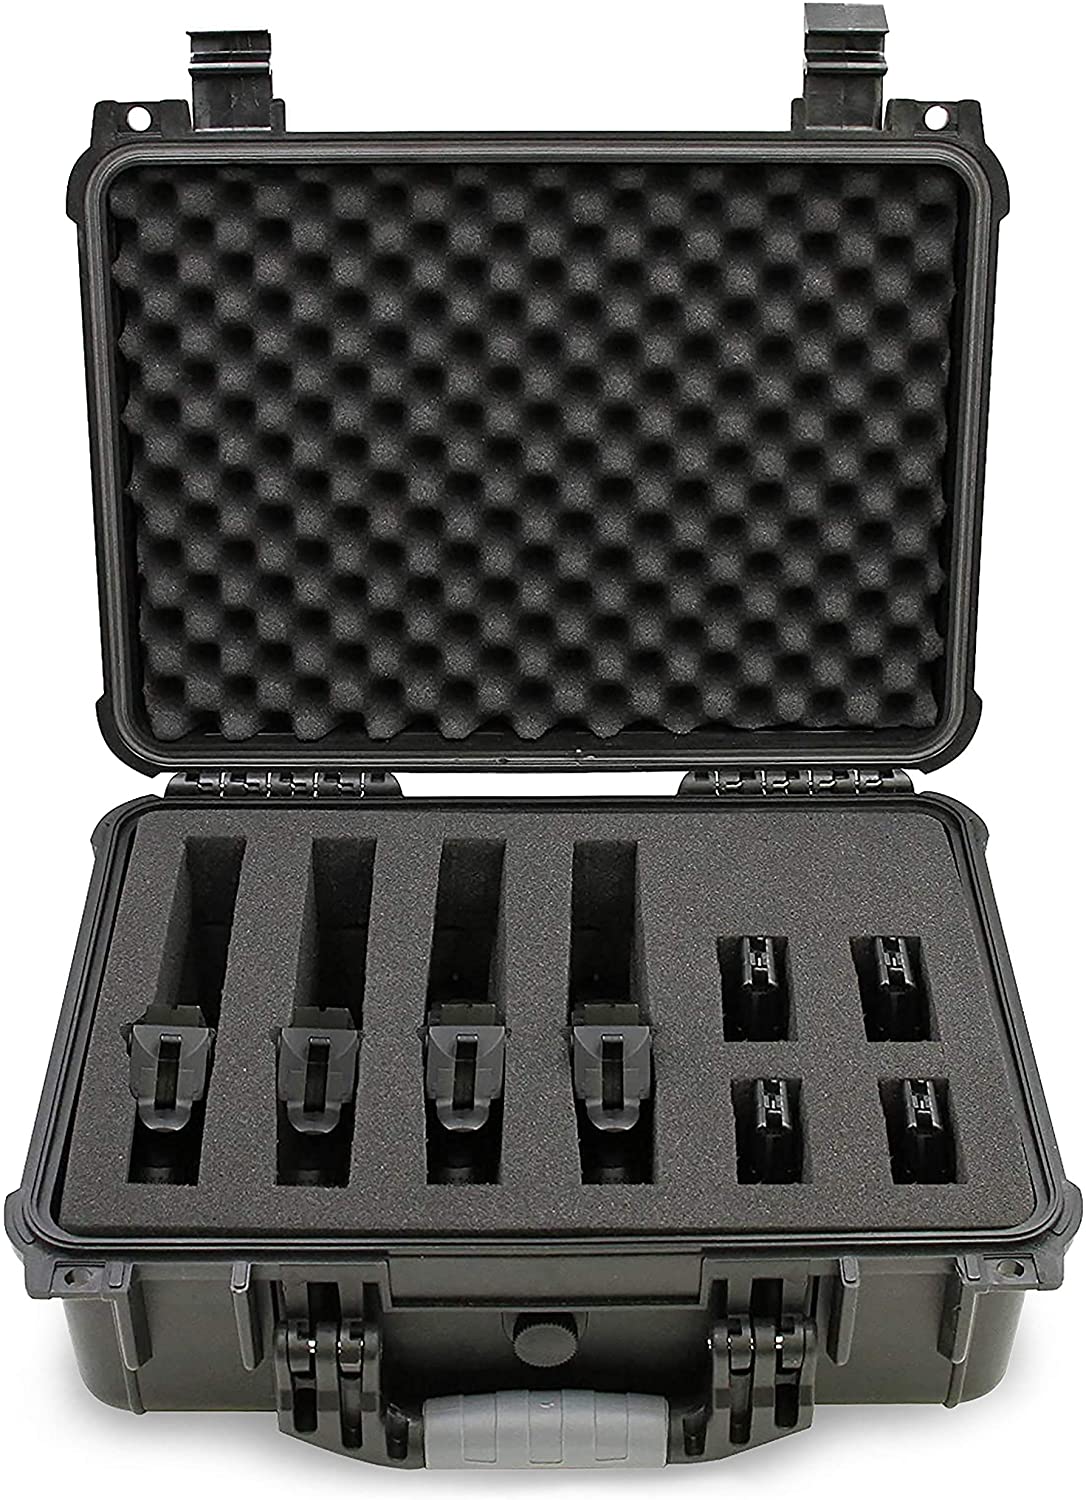 Waterproof Shockproof Hard Travel Case Storage Box Customizable